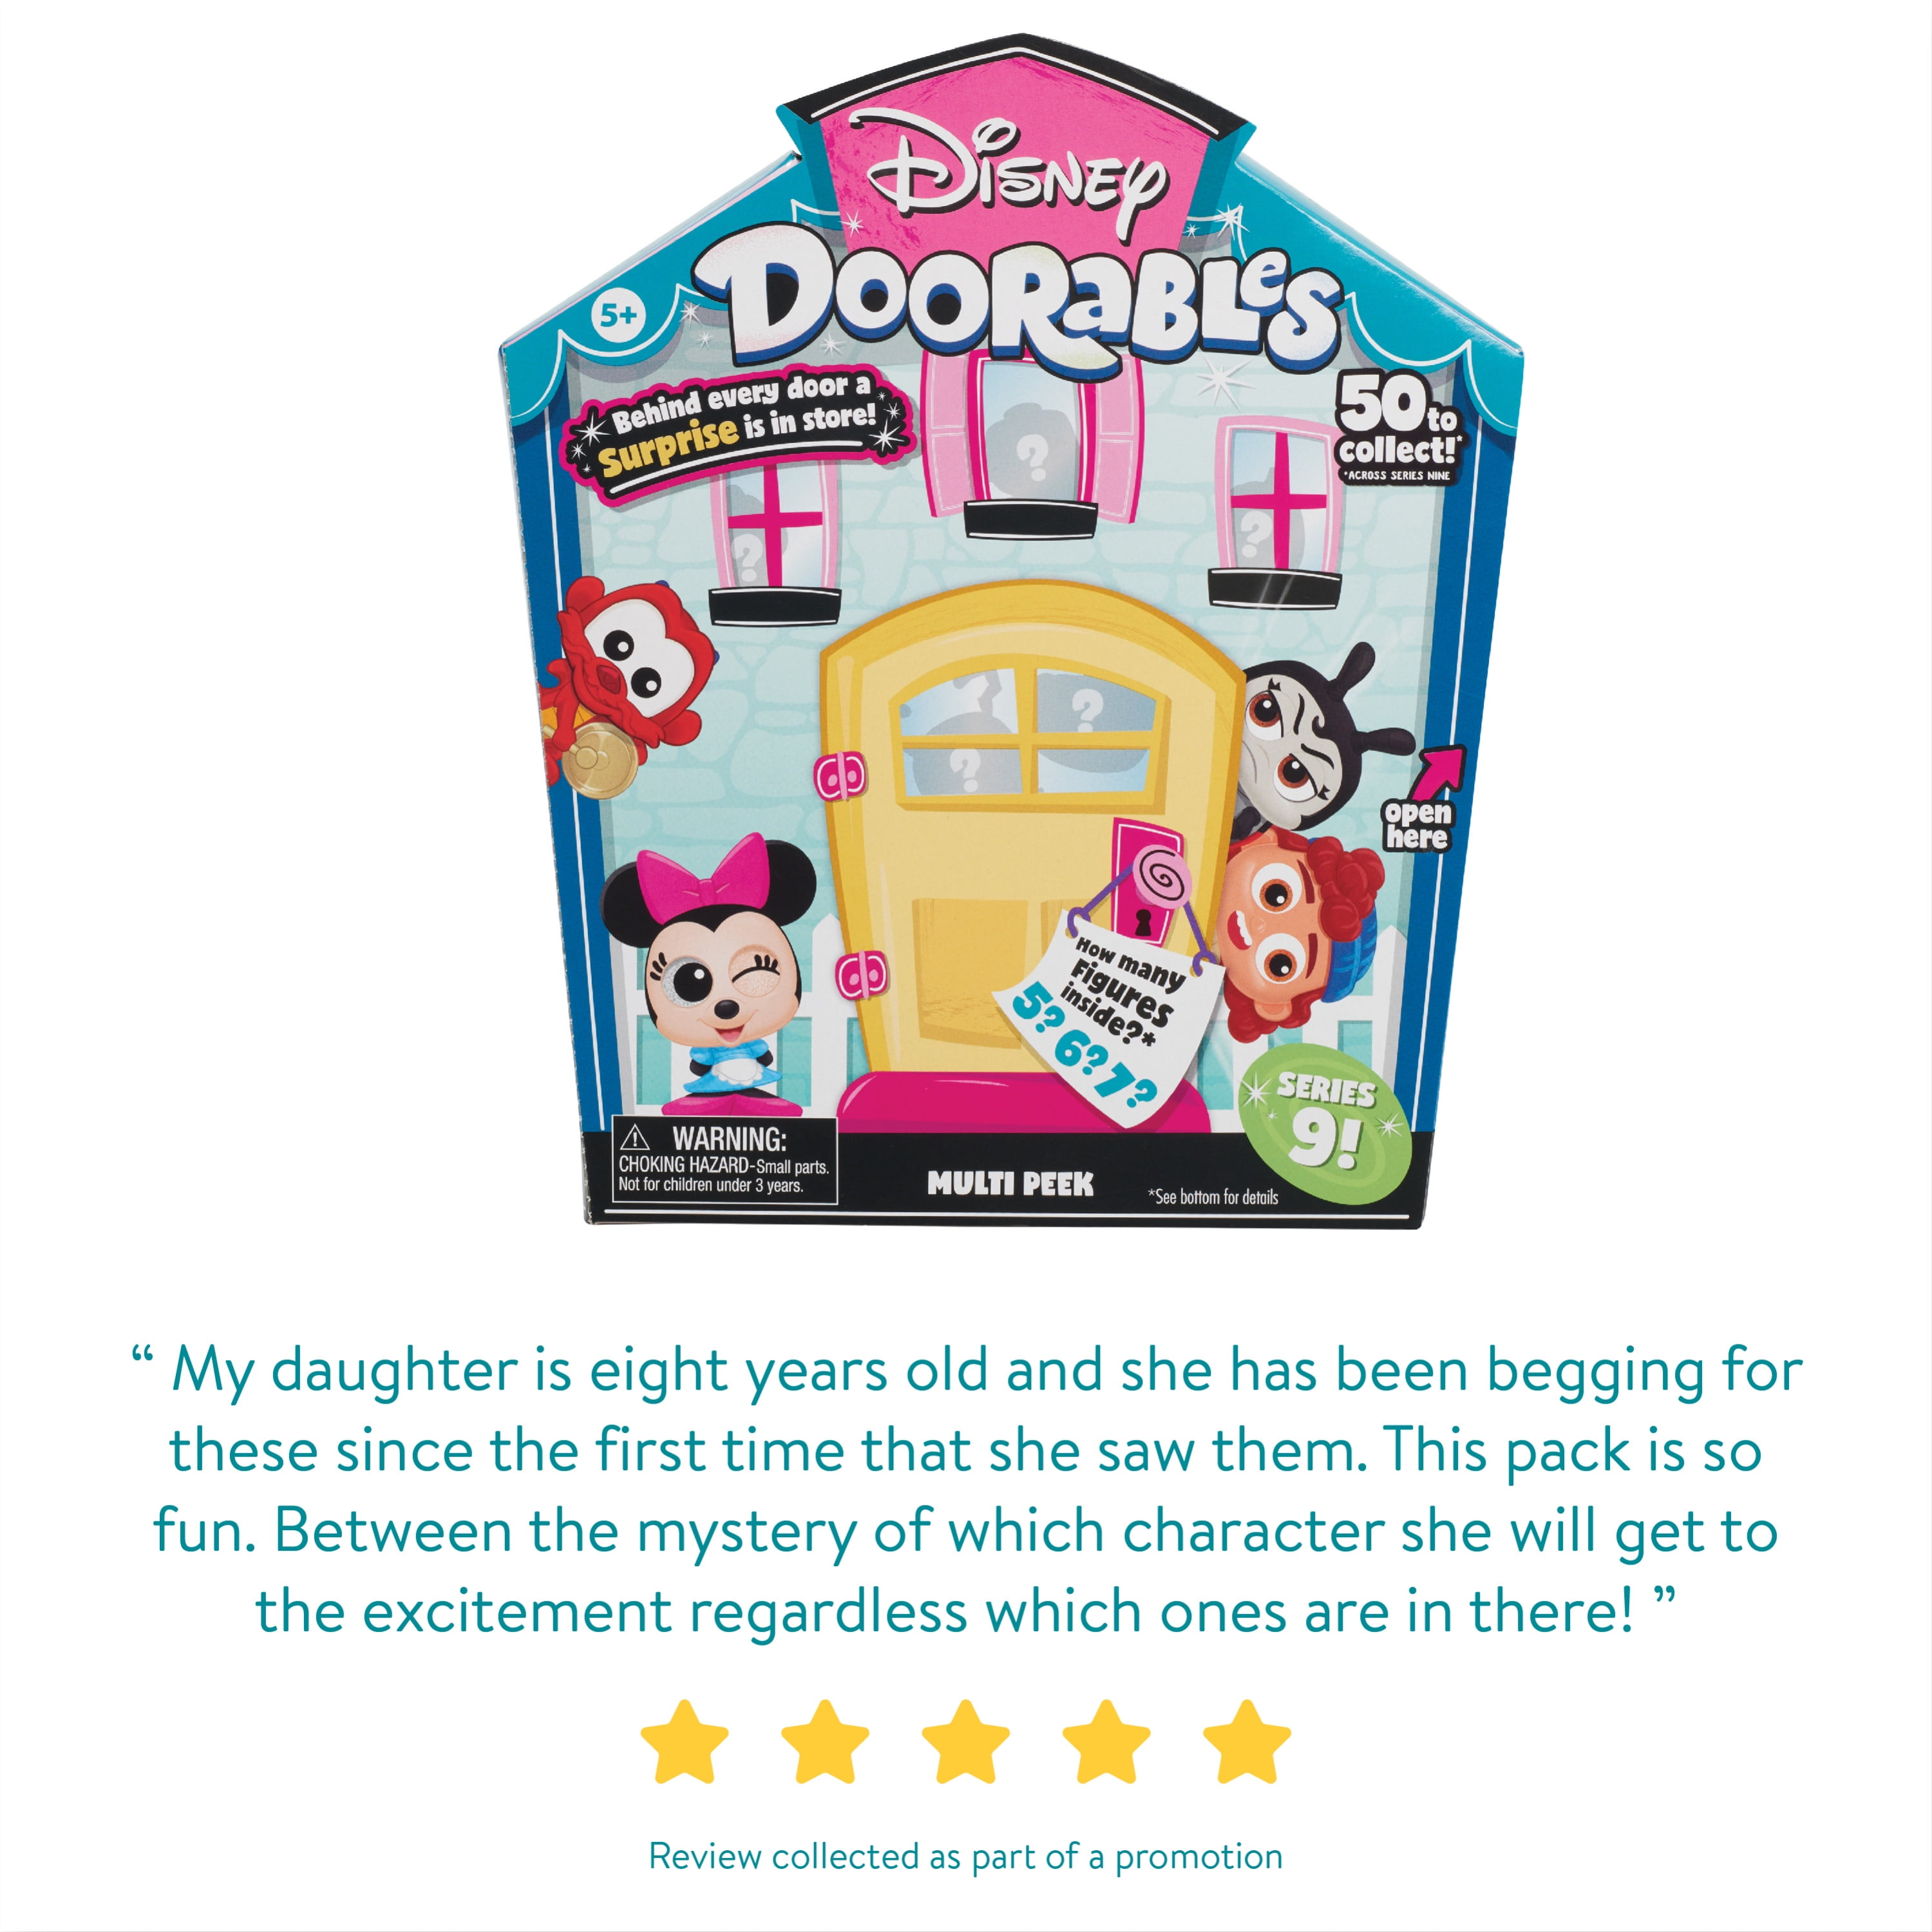 Disney Doorables Mini Peek Series 9, 1 box / 50 ct - Kroger